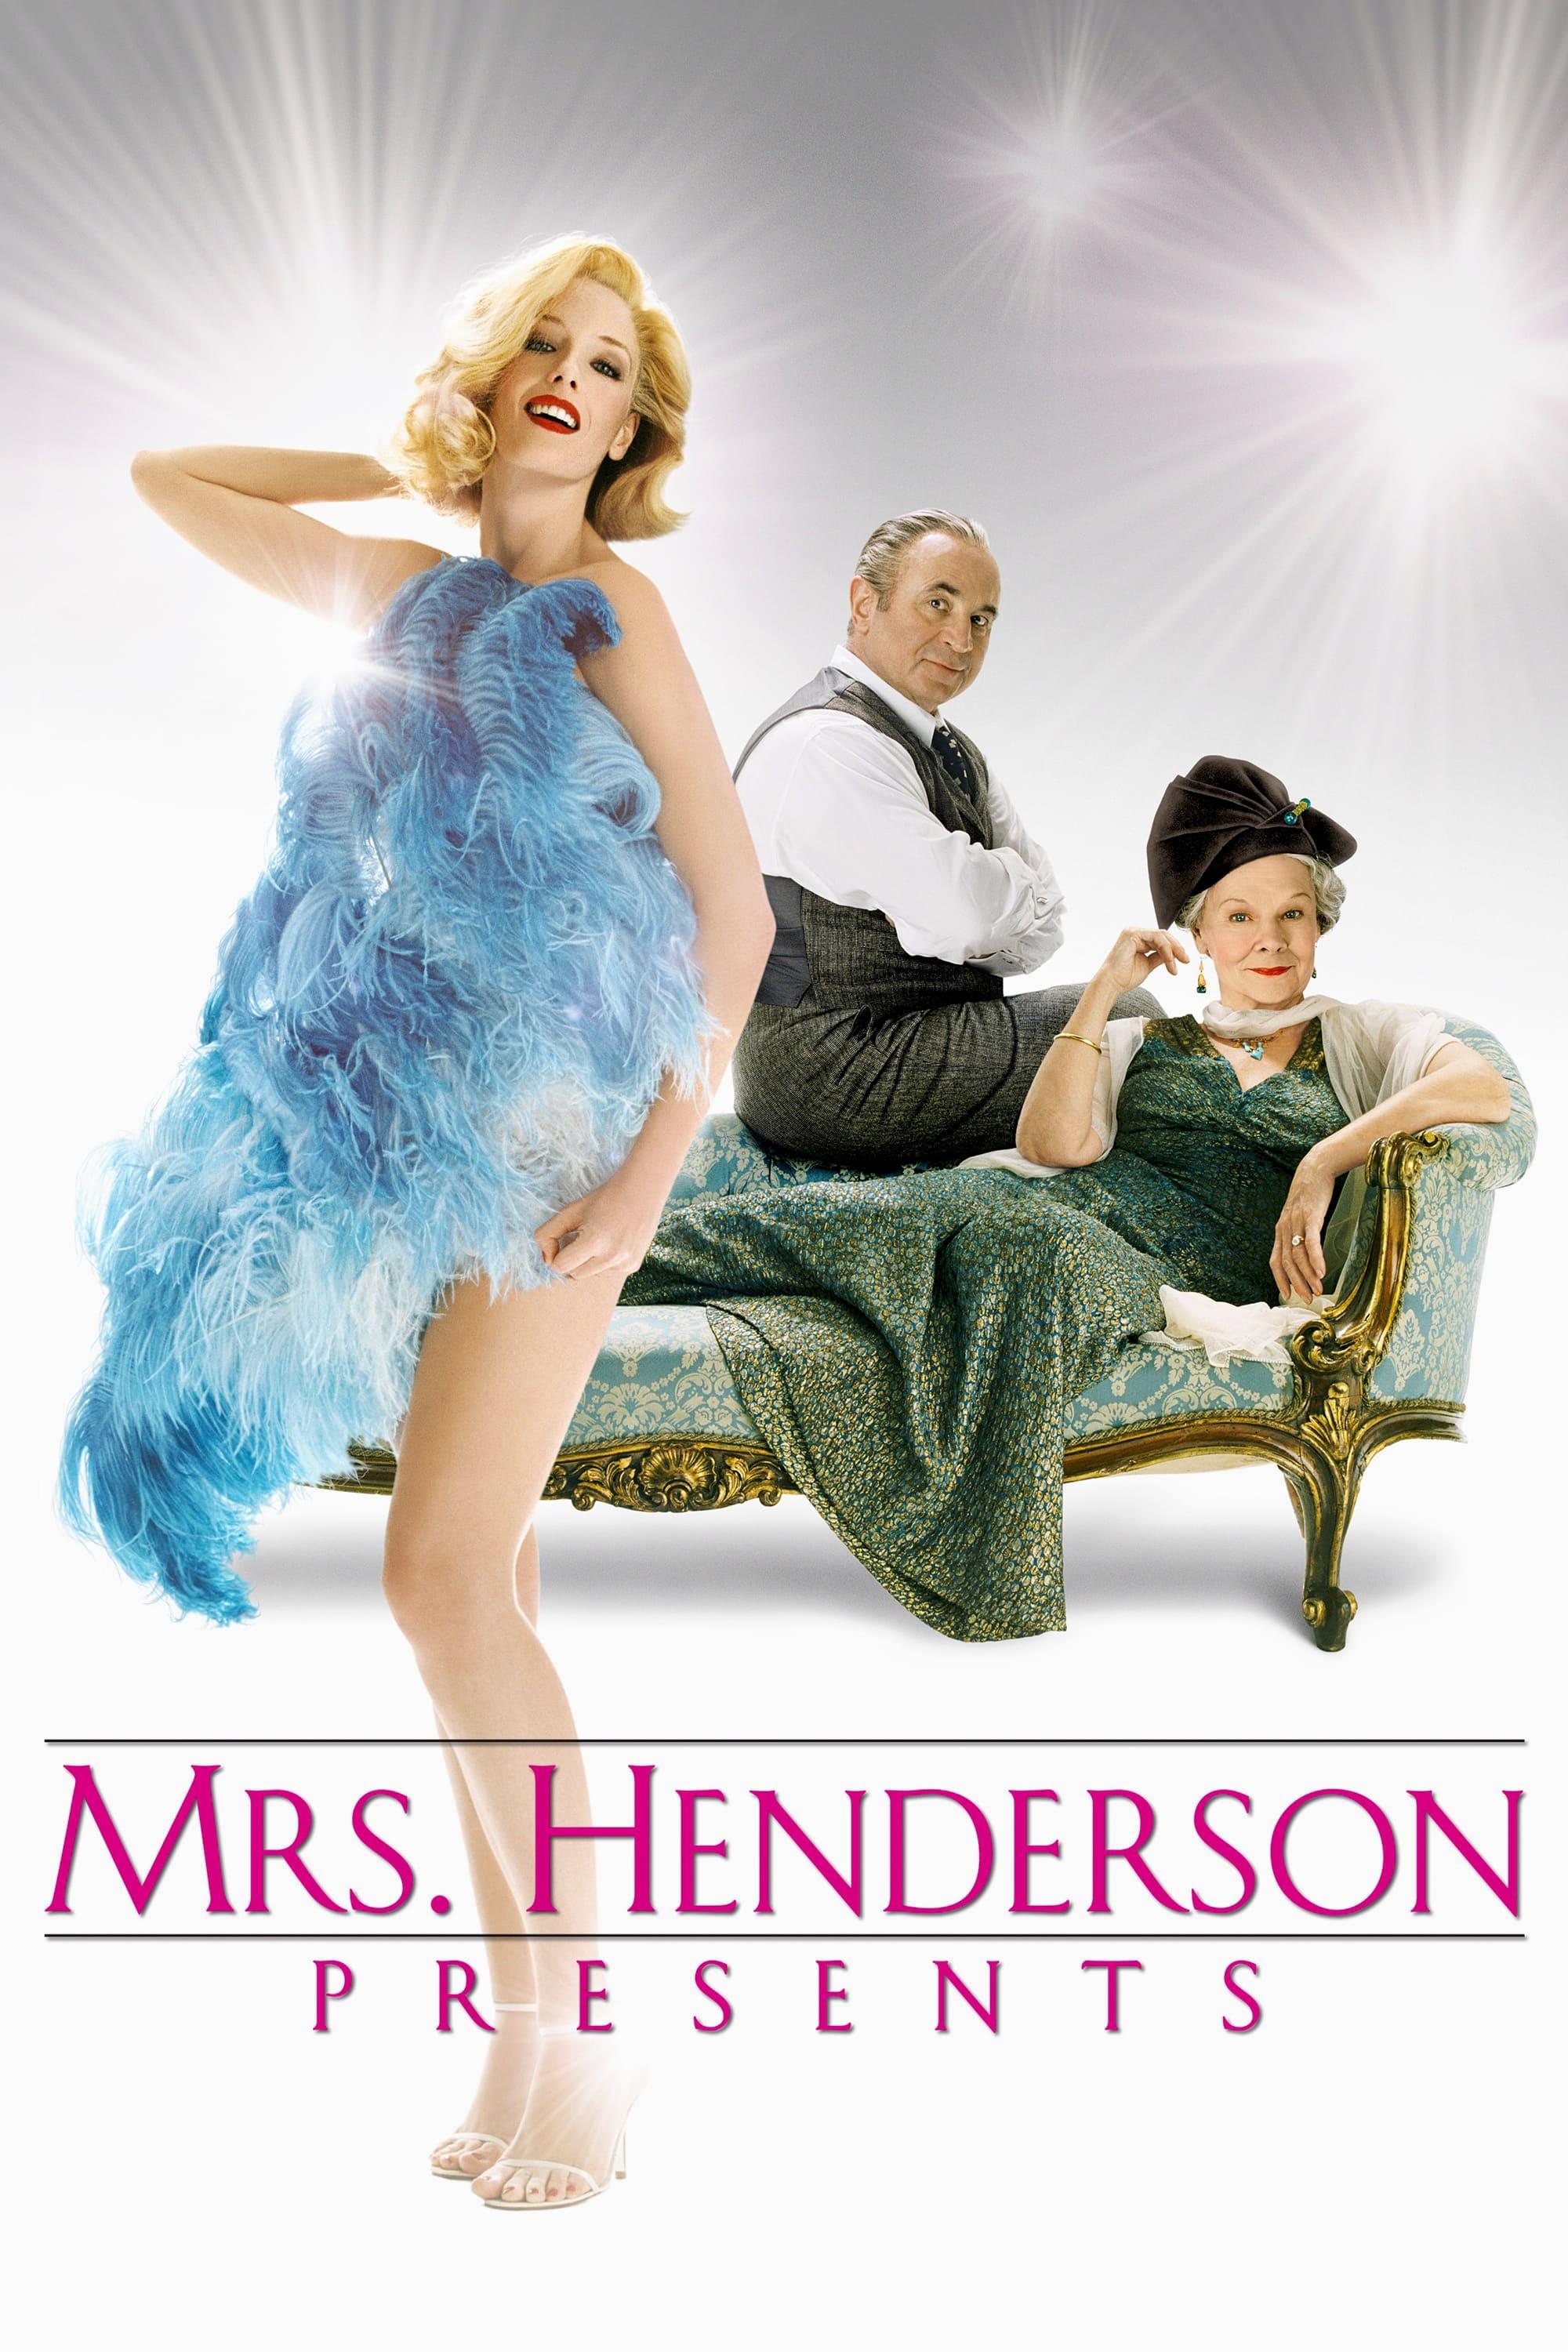 Lady Henderson präsentiert poster